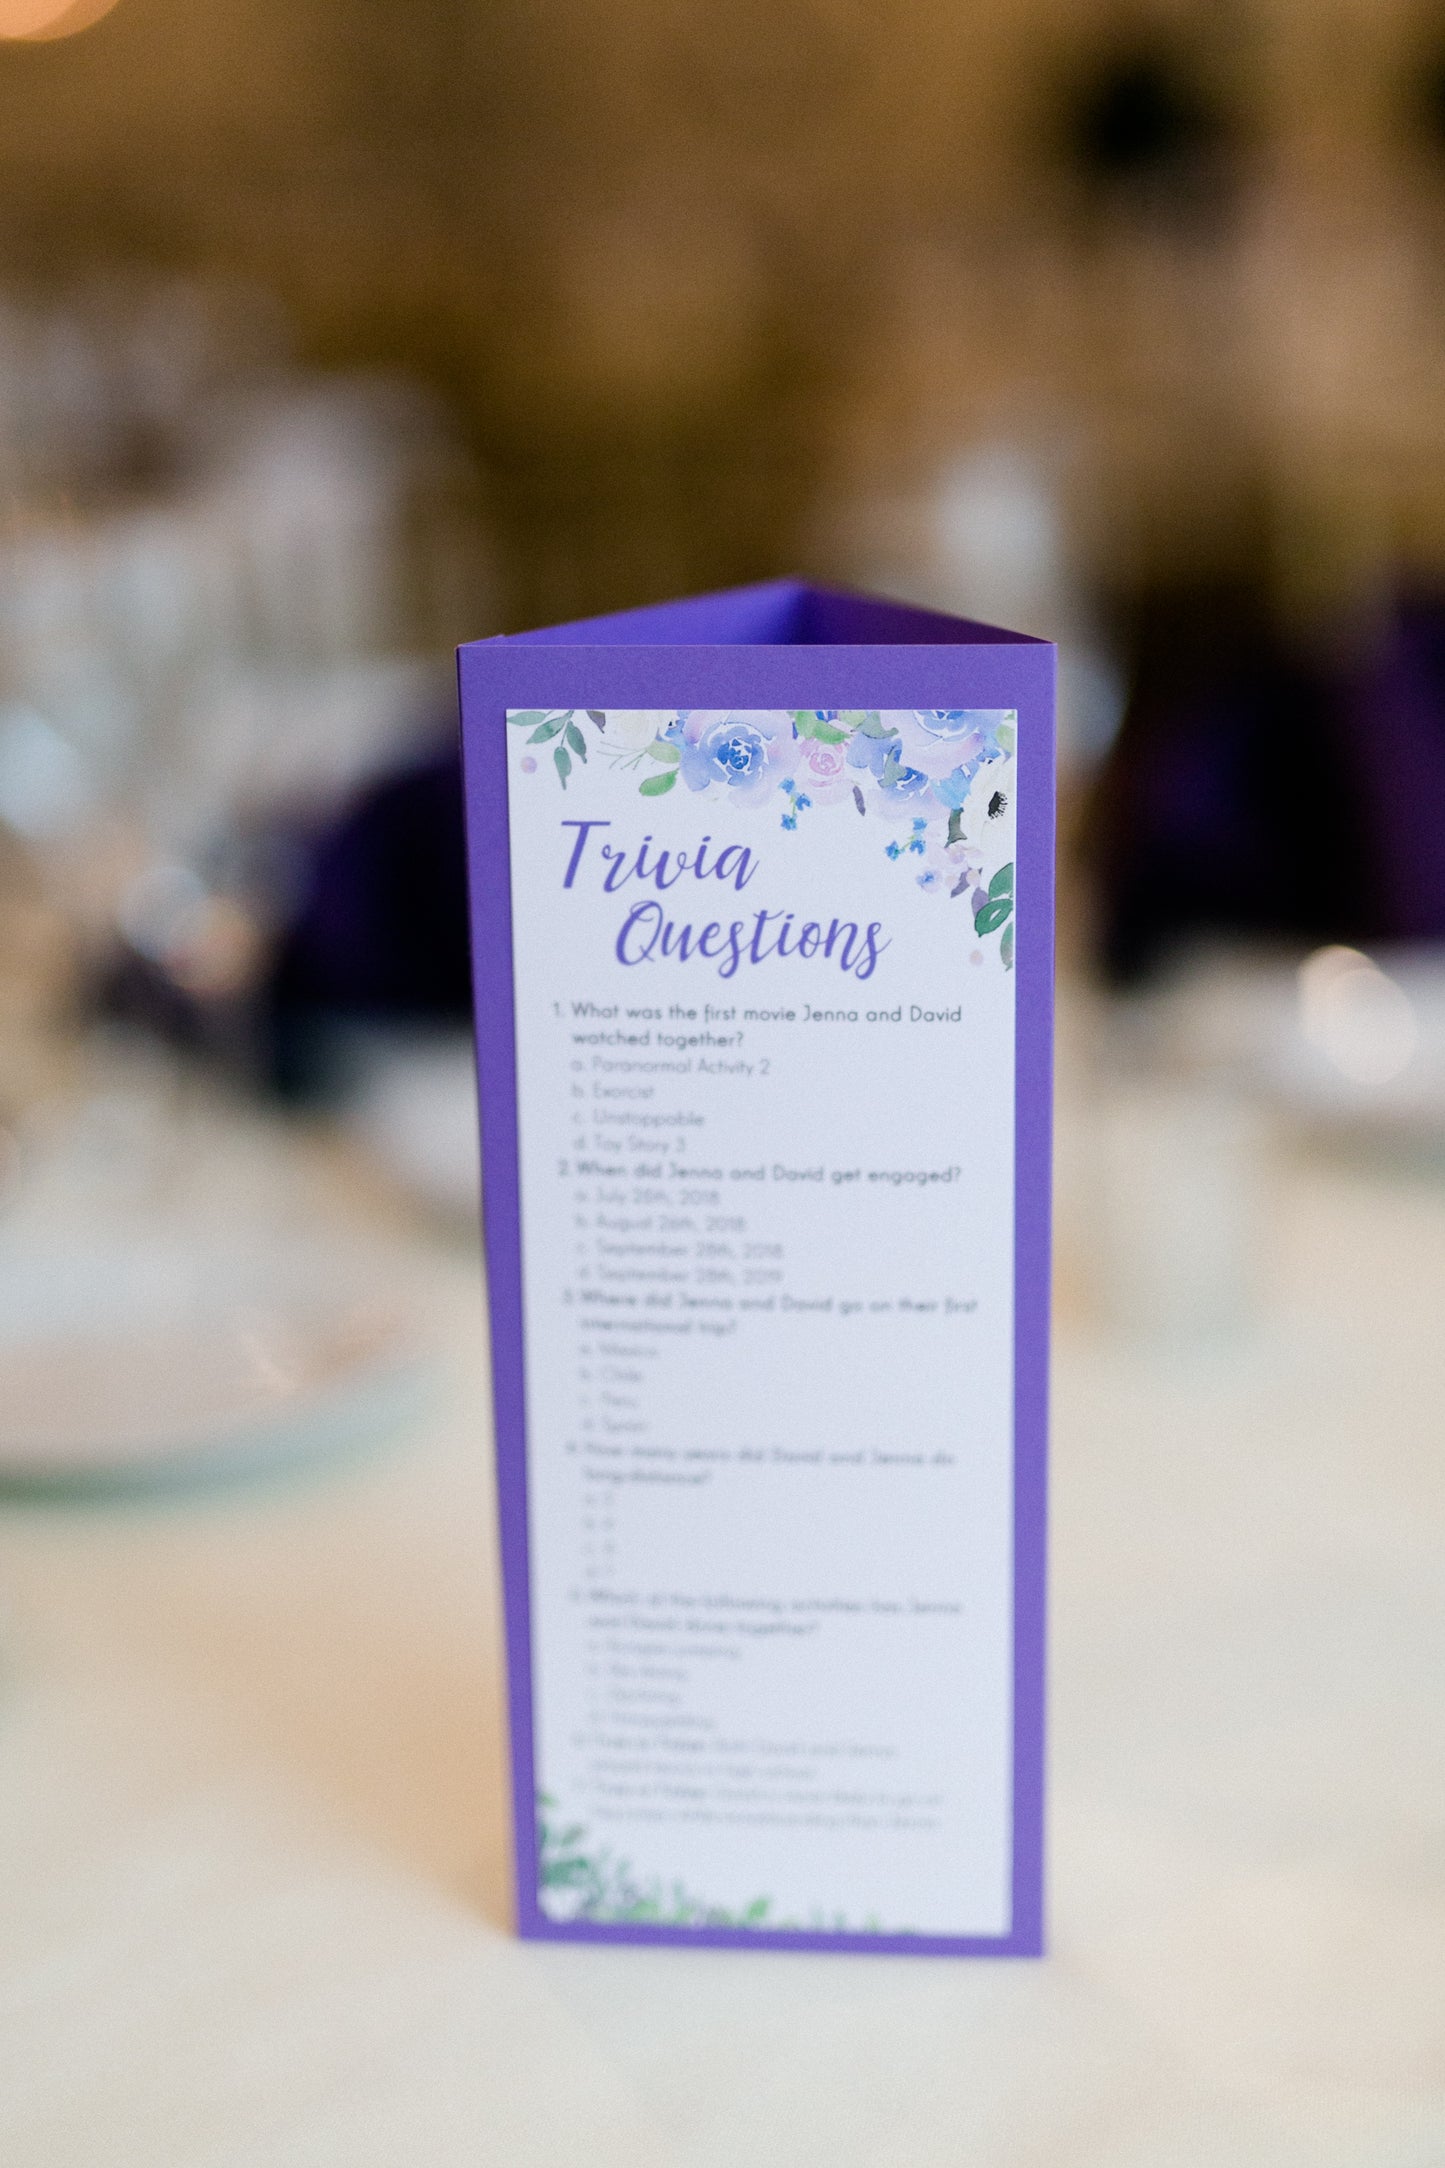 Lavender Purple Floral Wreath Wedding Invitation Suite